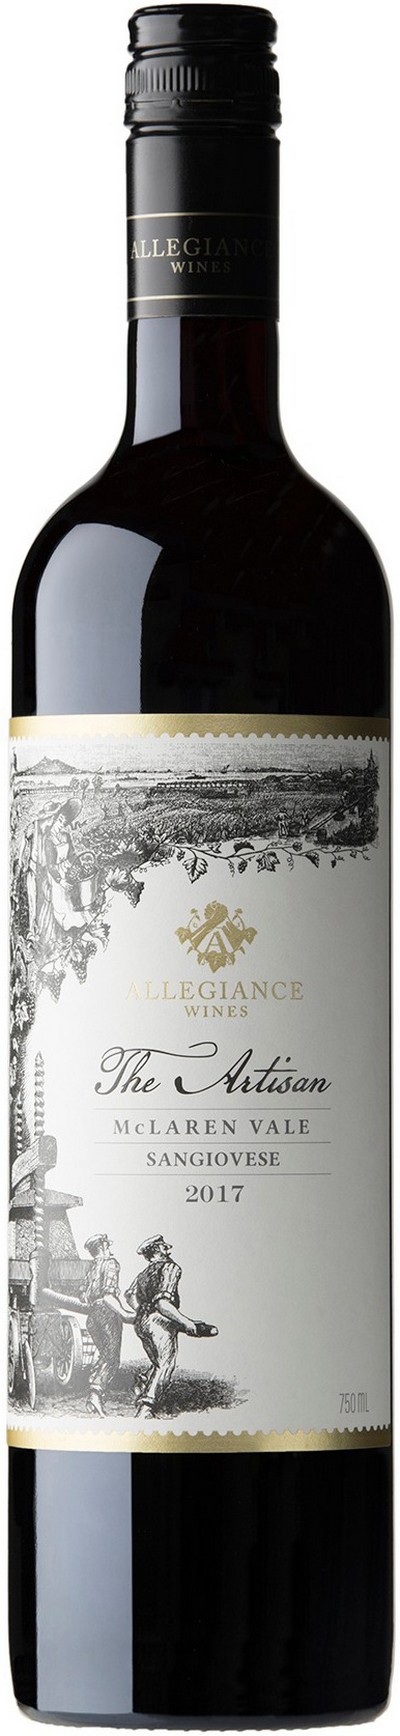 allegiance-wines-the-artisan-mclaren-vale-sangiovese-2017